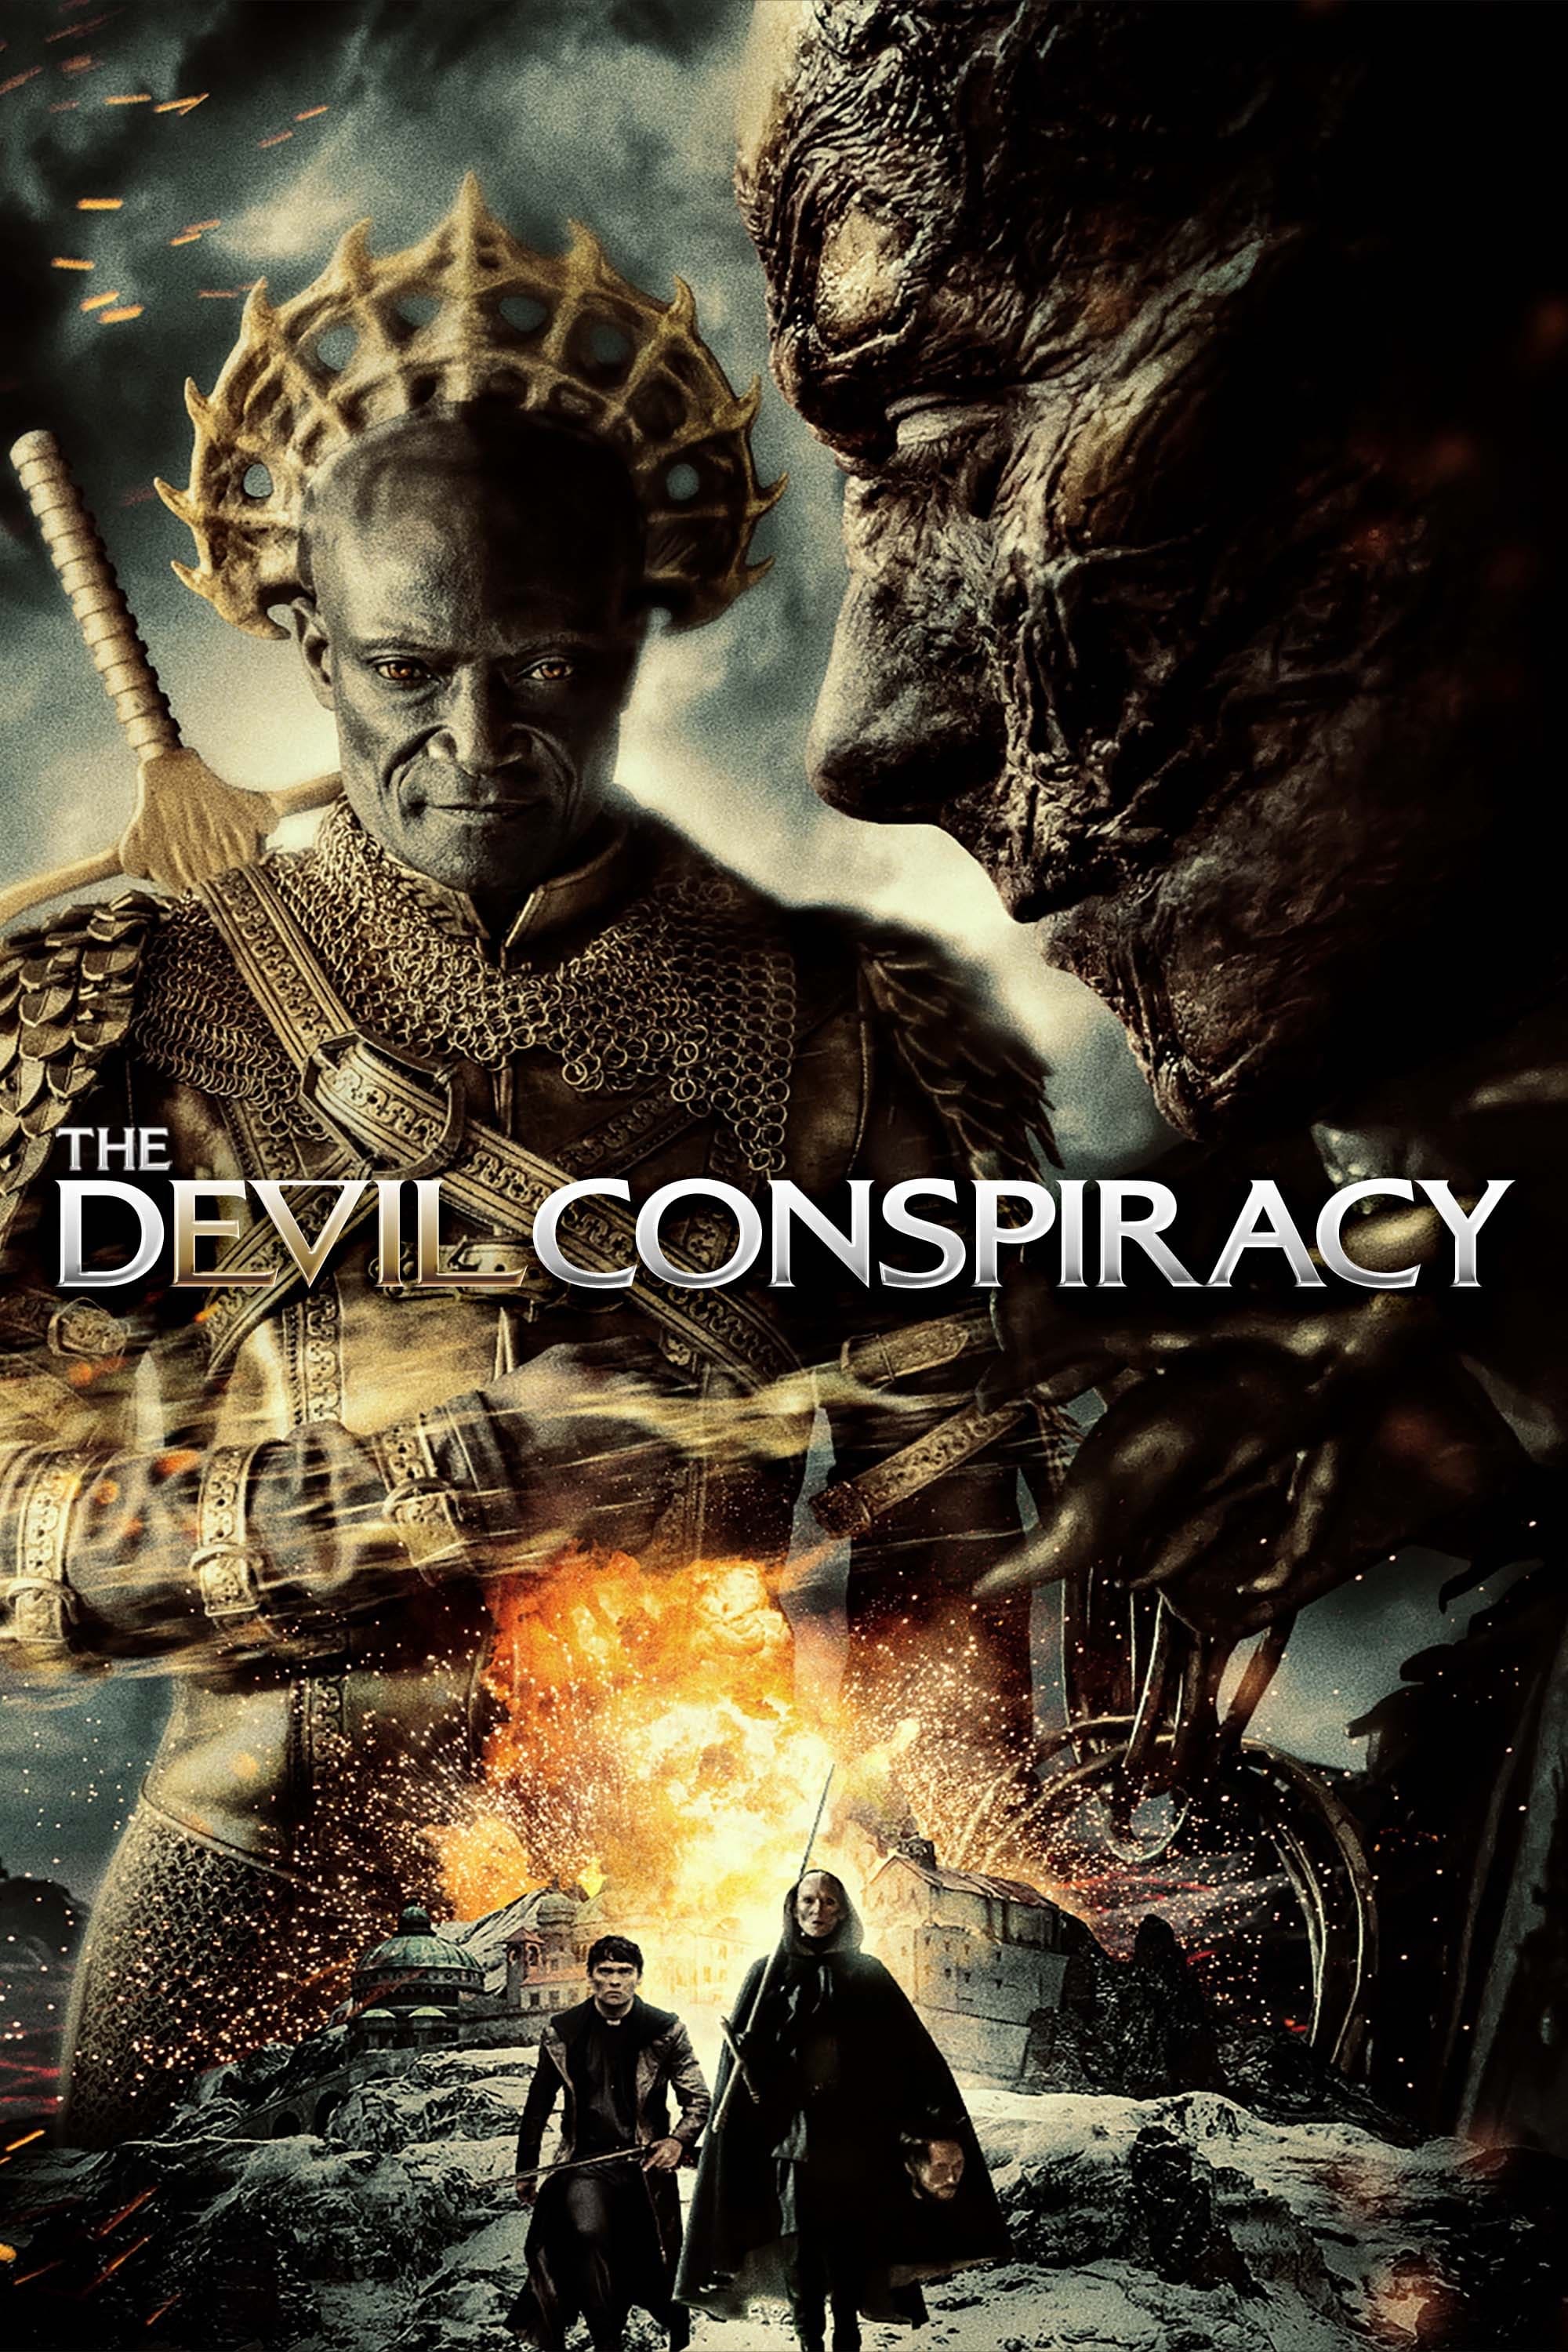 The Devil Conspiracy film